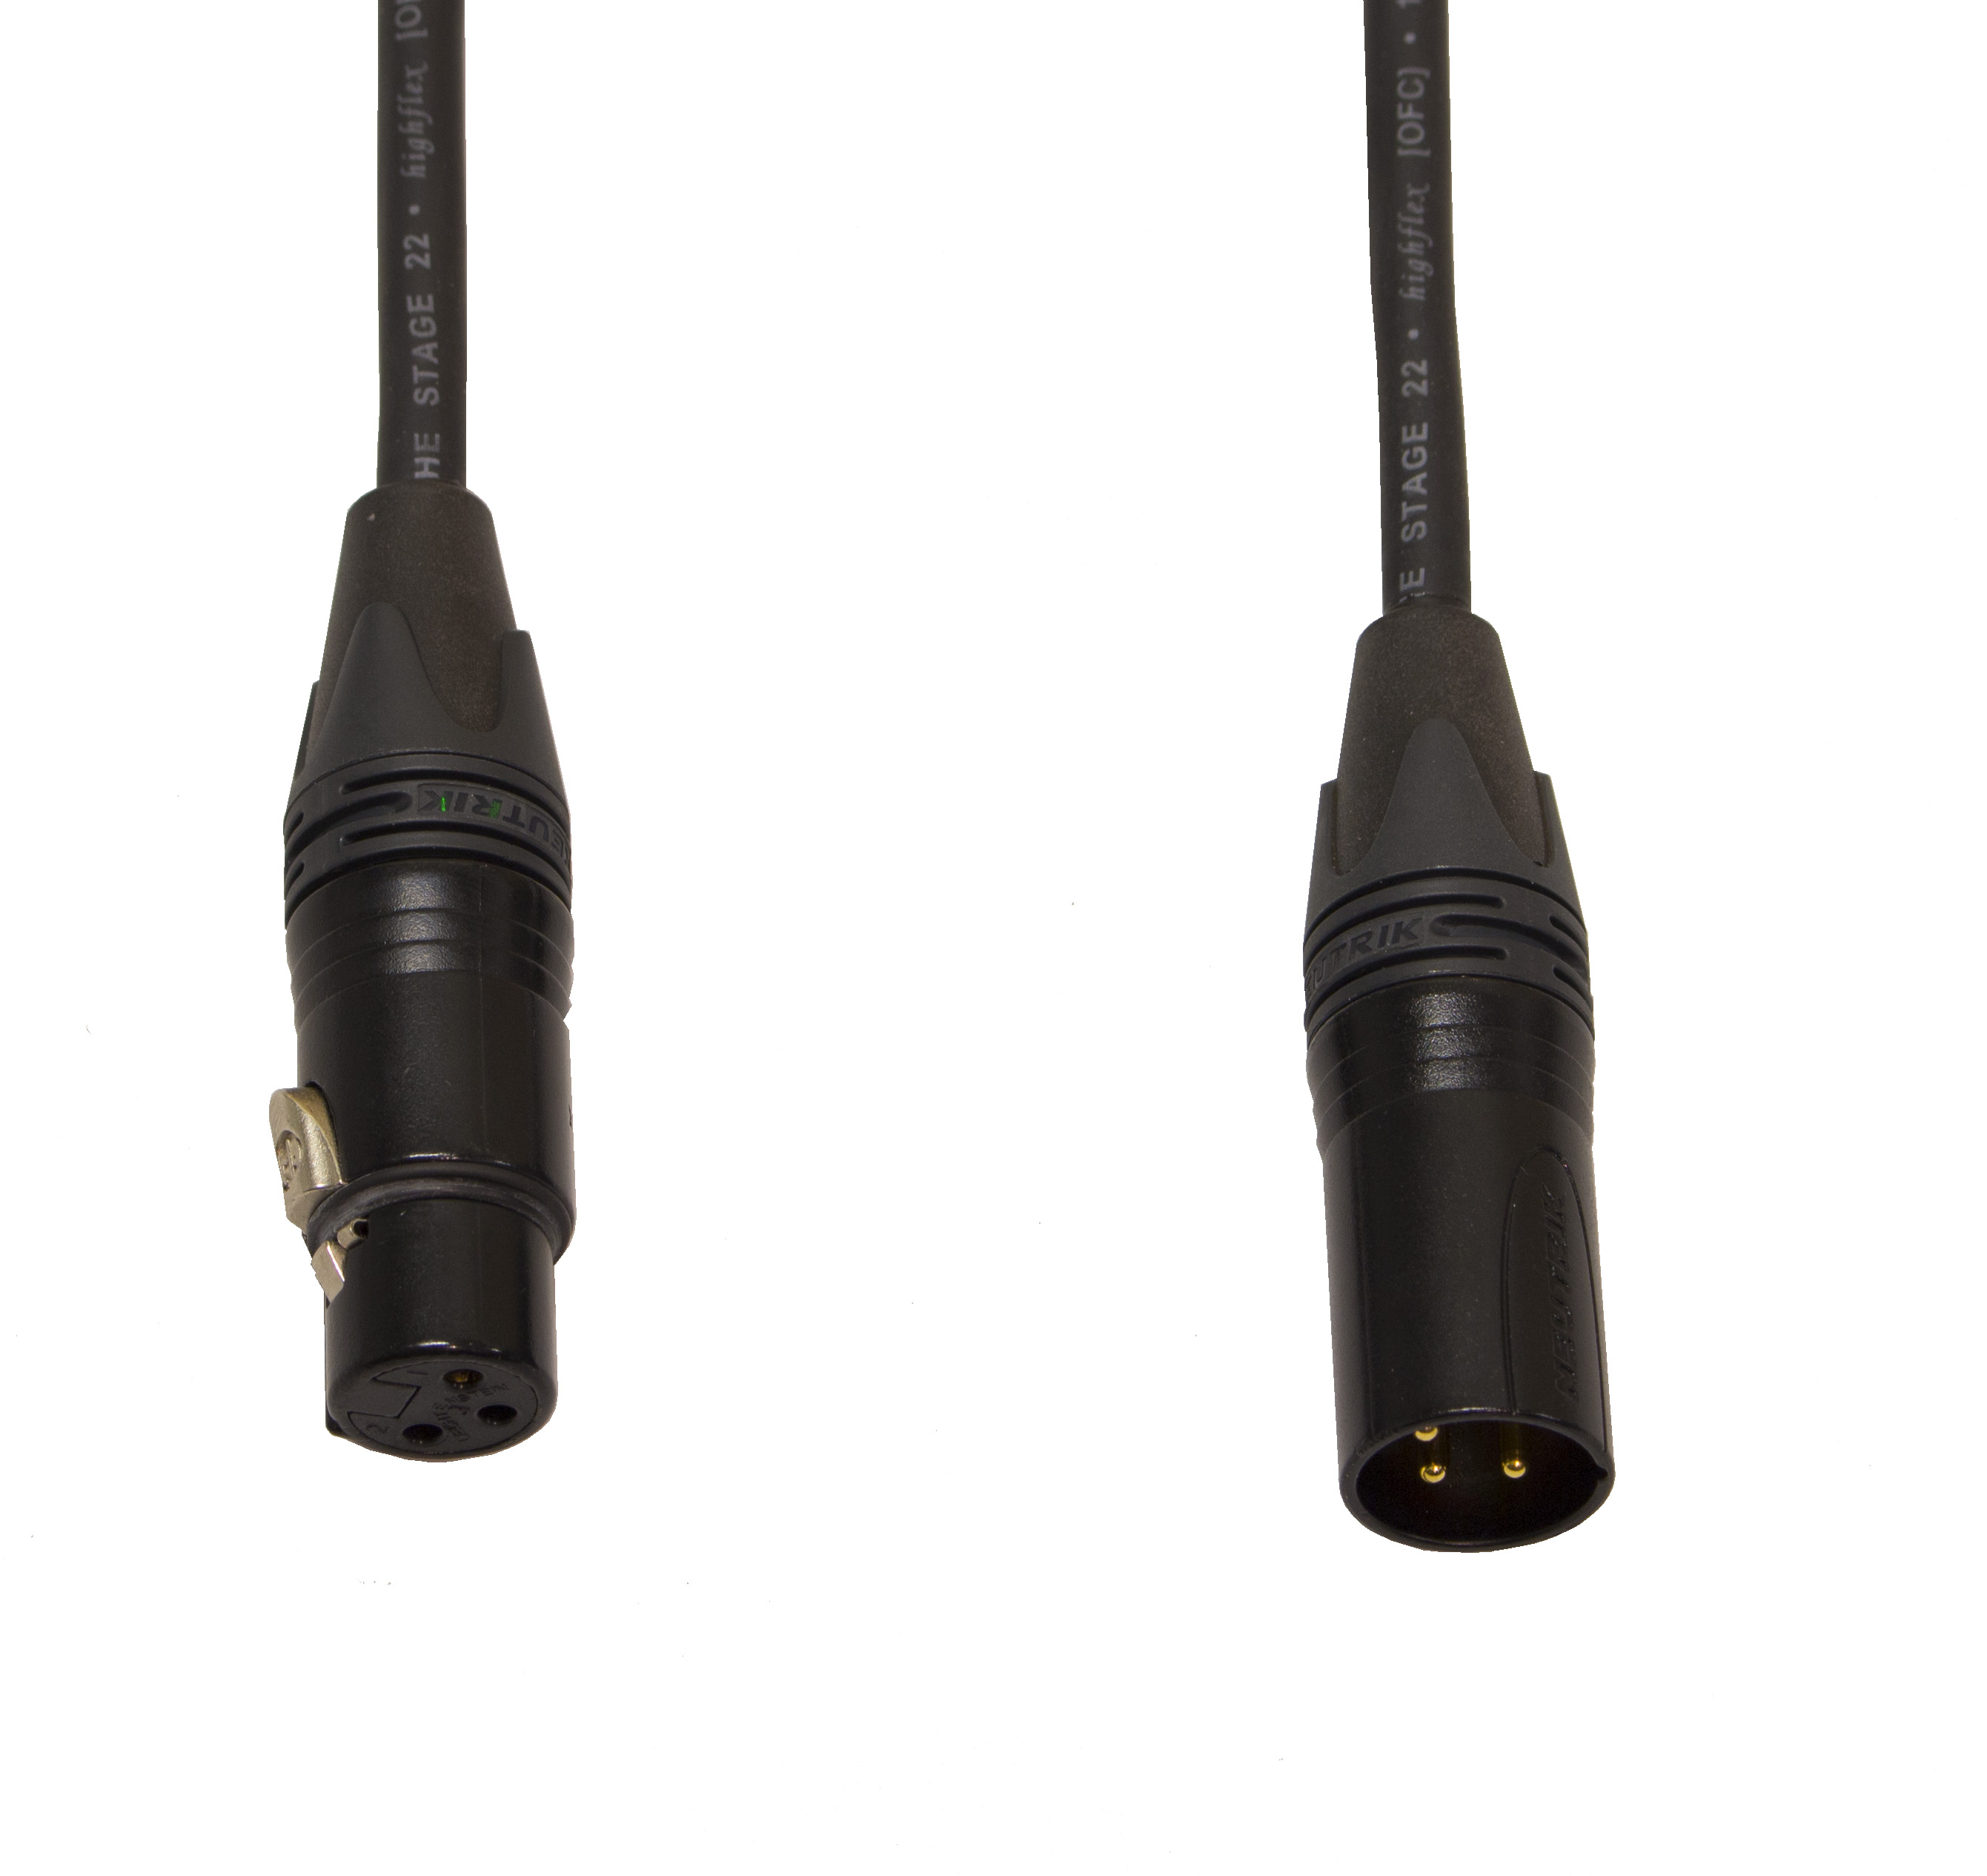 Audiokabel XLR konektor poz. Neutrik male/female  25 m, Sommer, černý